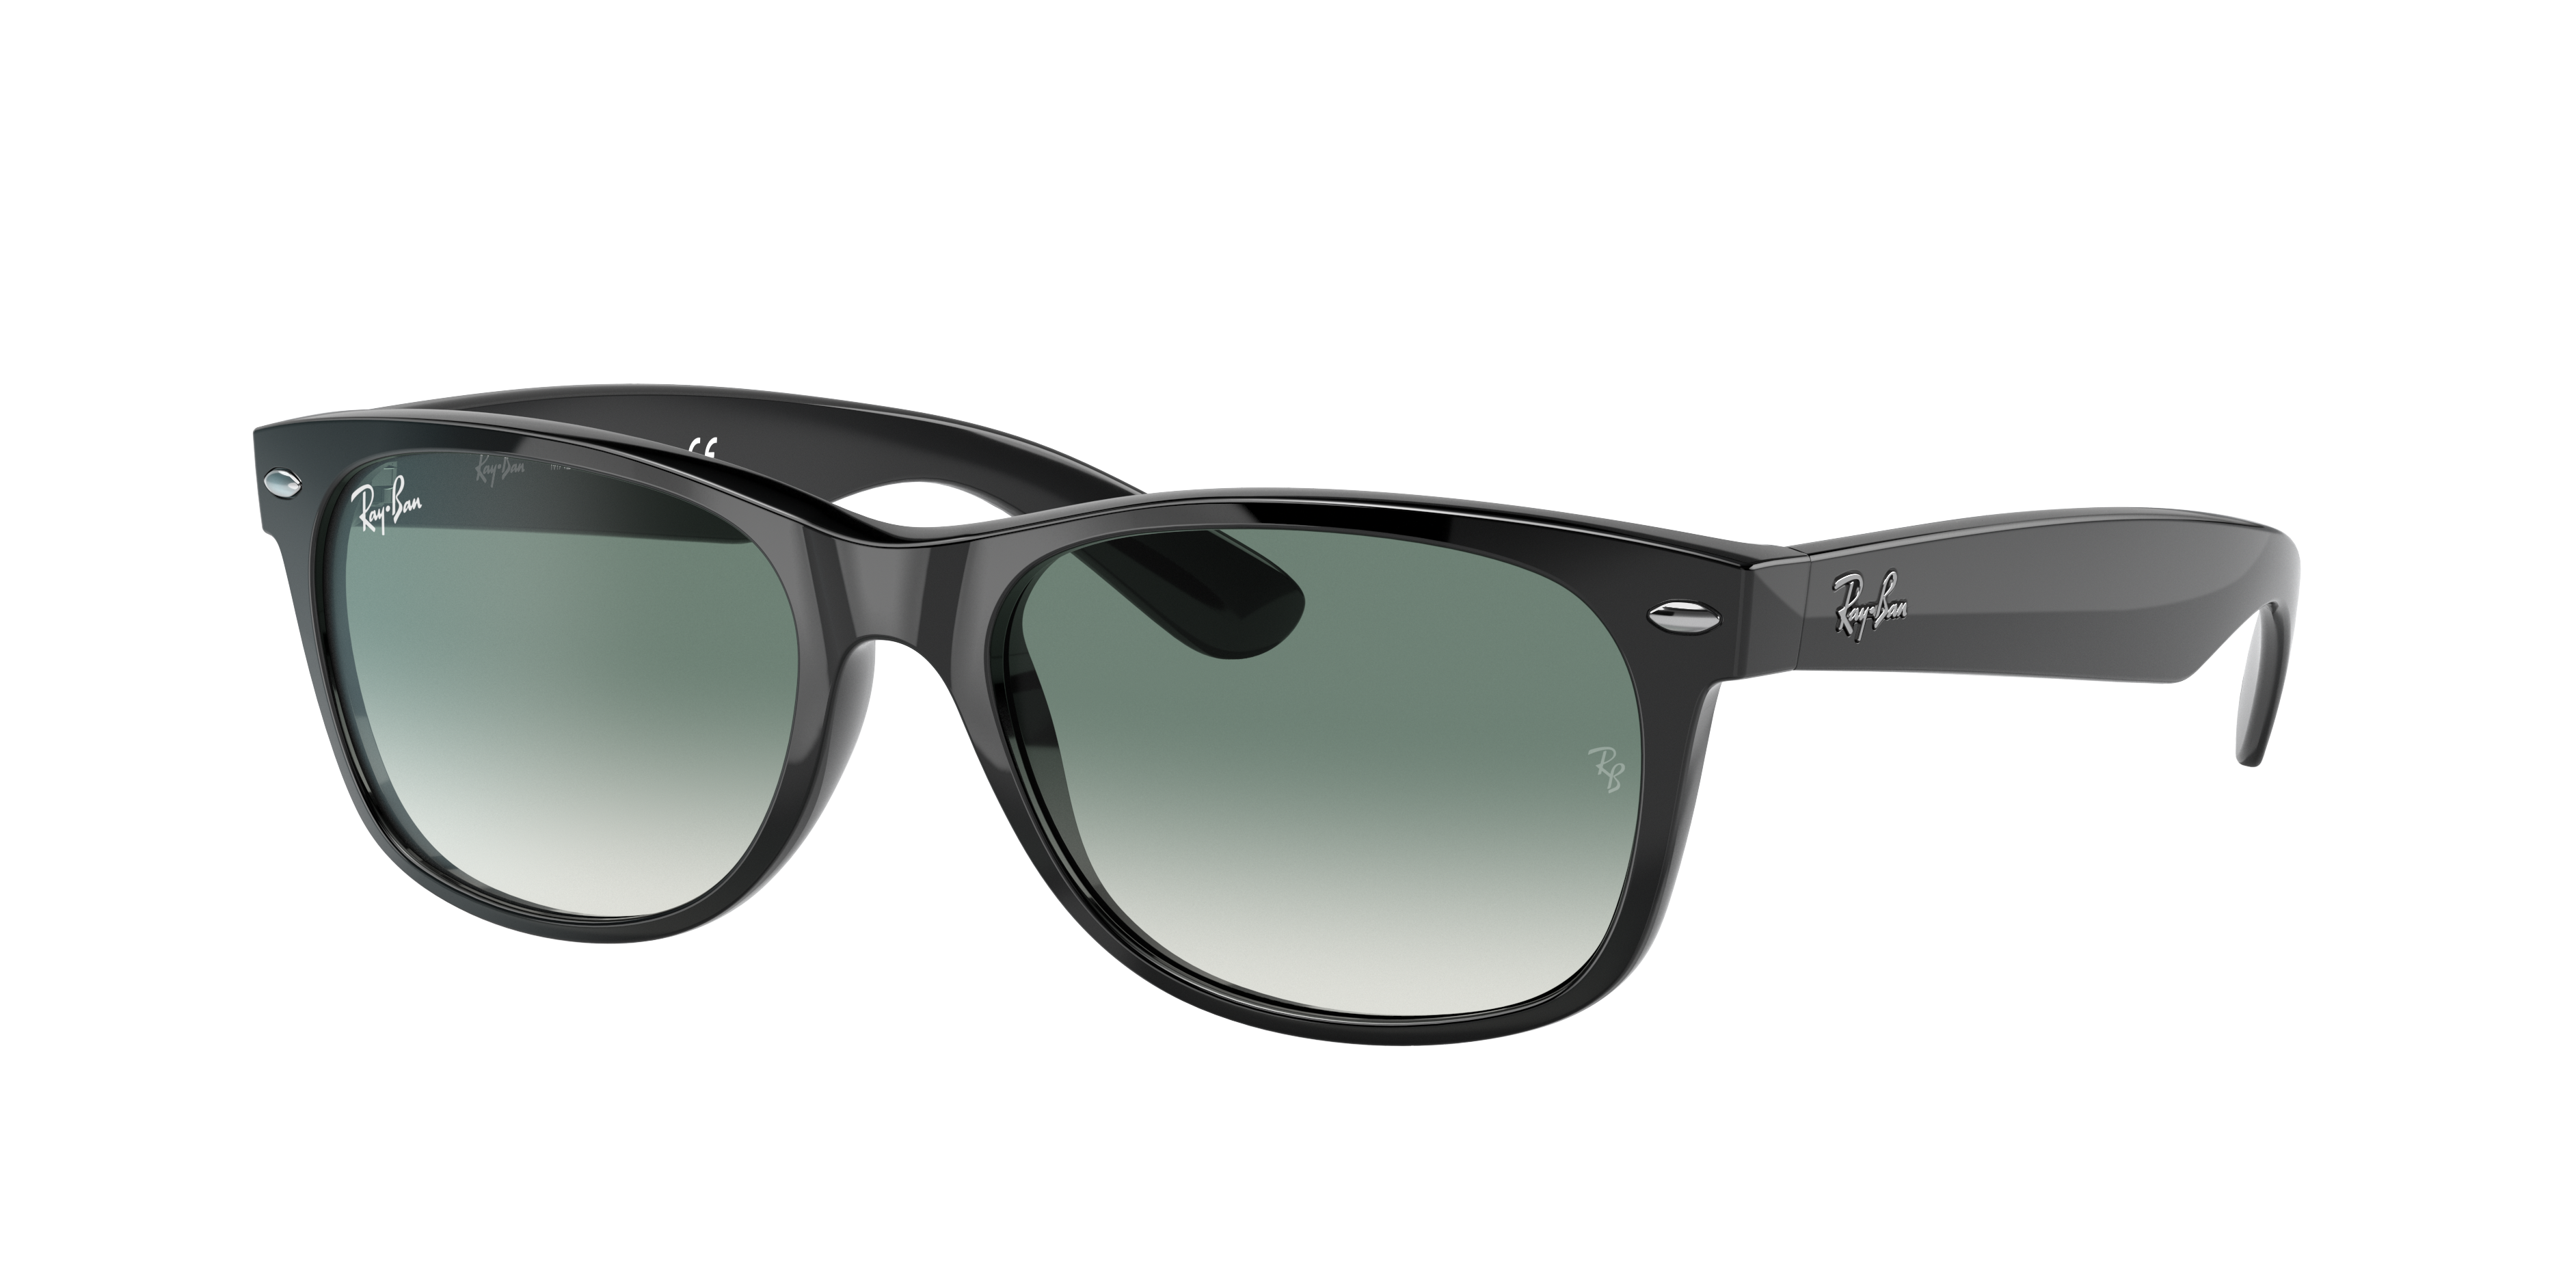 New Wayfarer Flash Gradient Lenses Sunglasses in Black and Green | Ray-Ban®